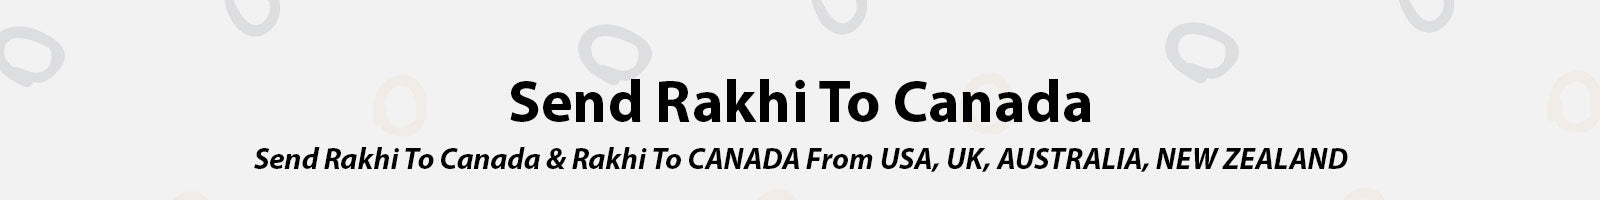 Send Rakhi To Canada from USA, INDIA, UK, Australia, And New Zealand